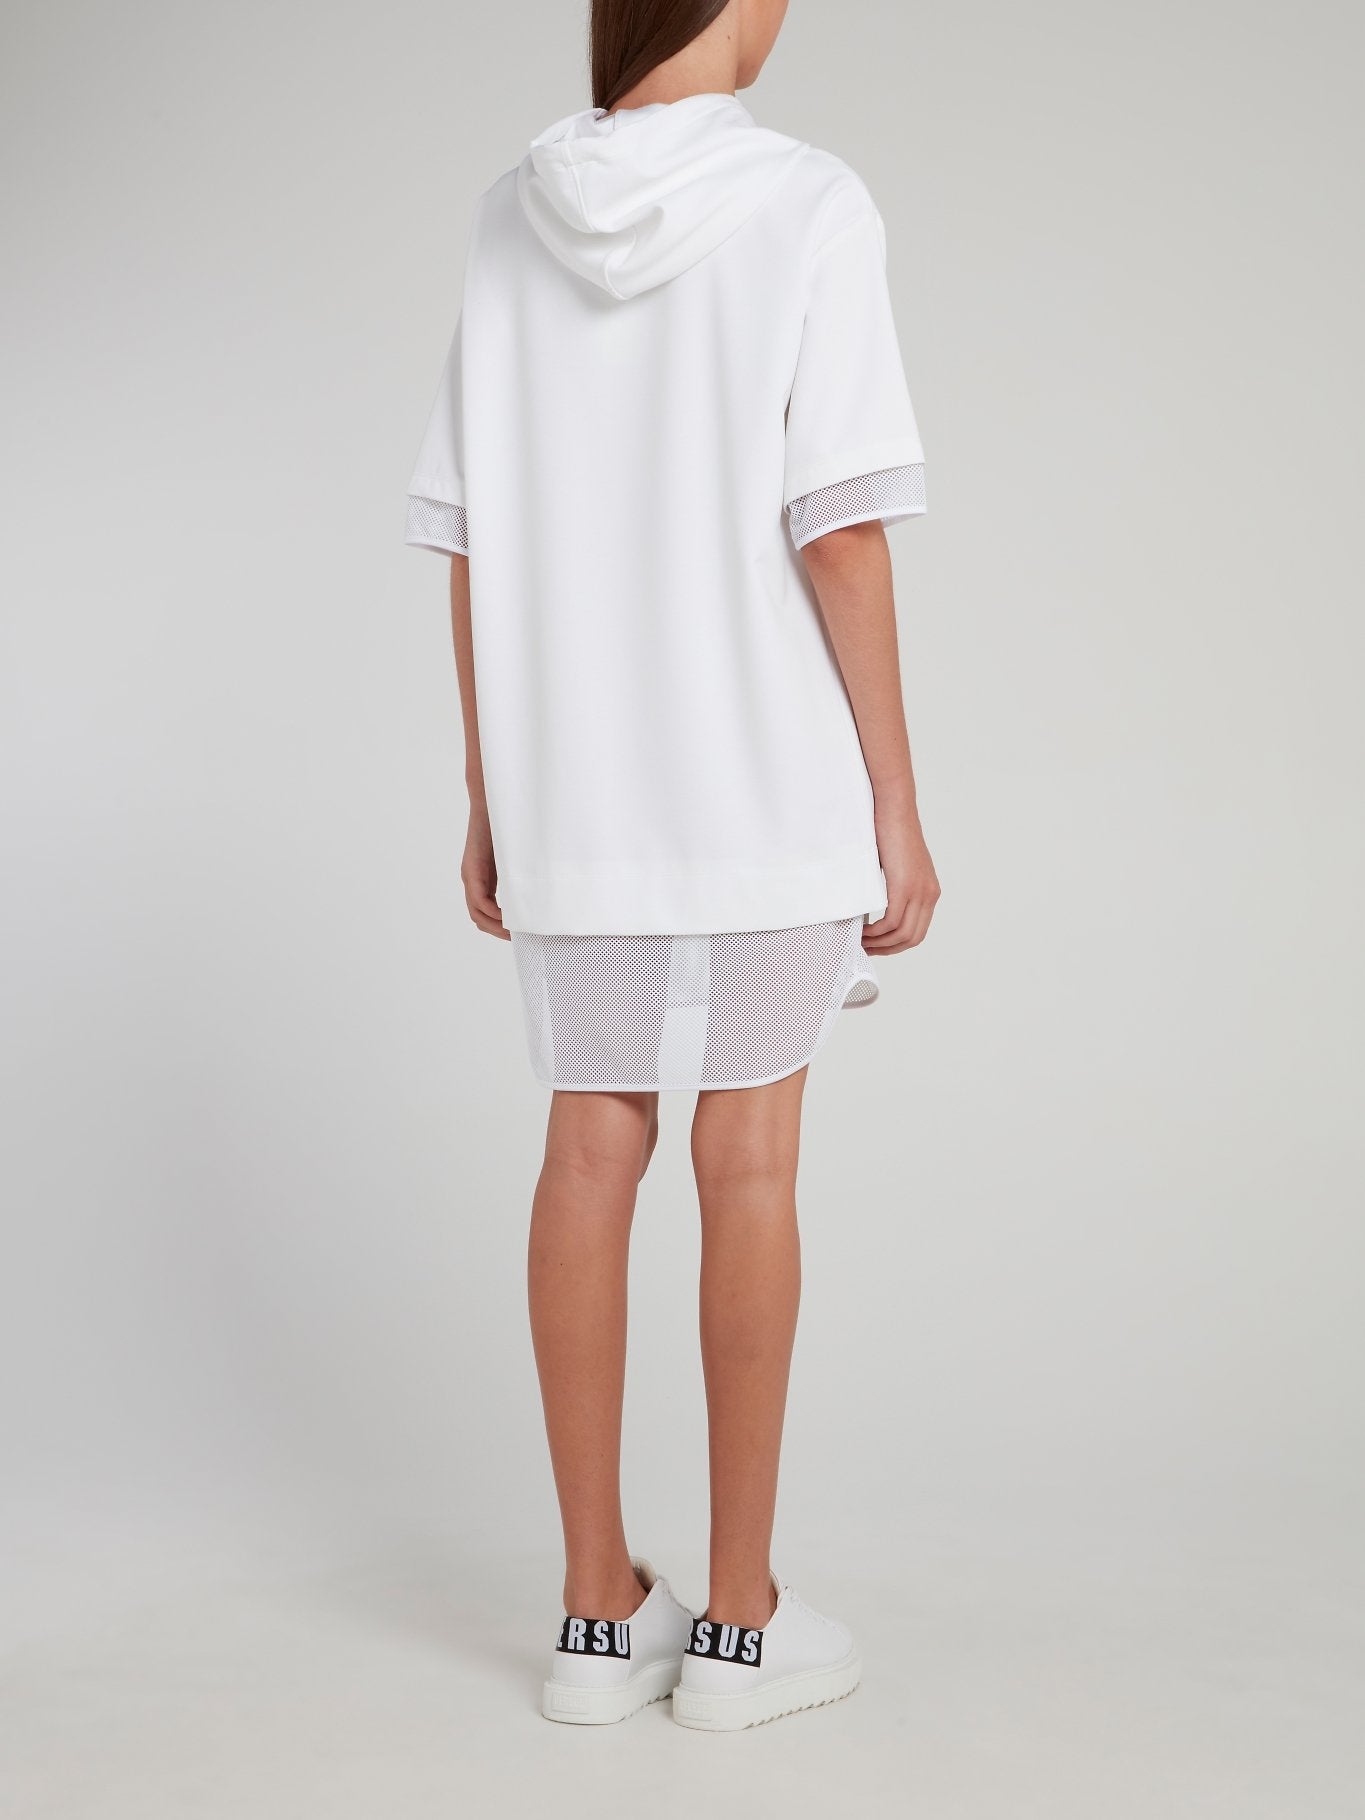 White Net Edge Embellished Hooded Dress